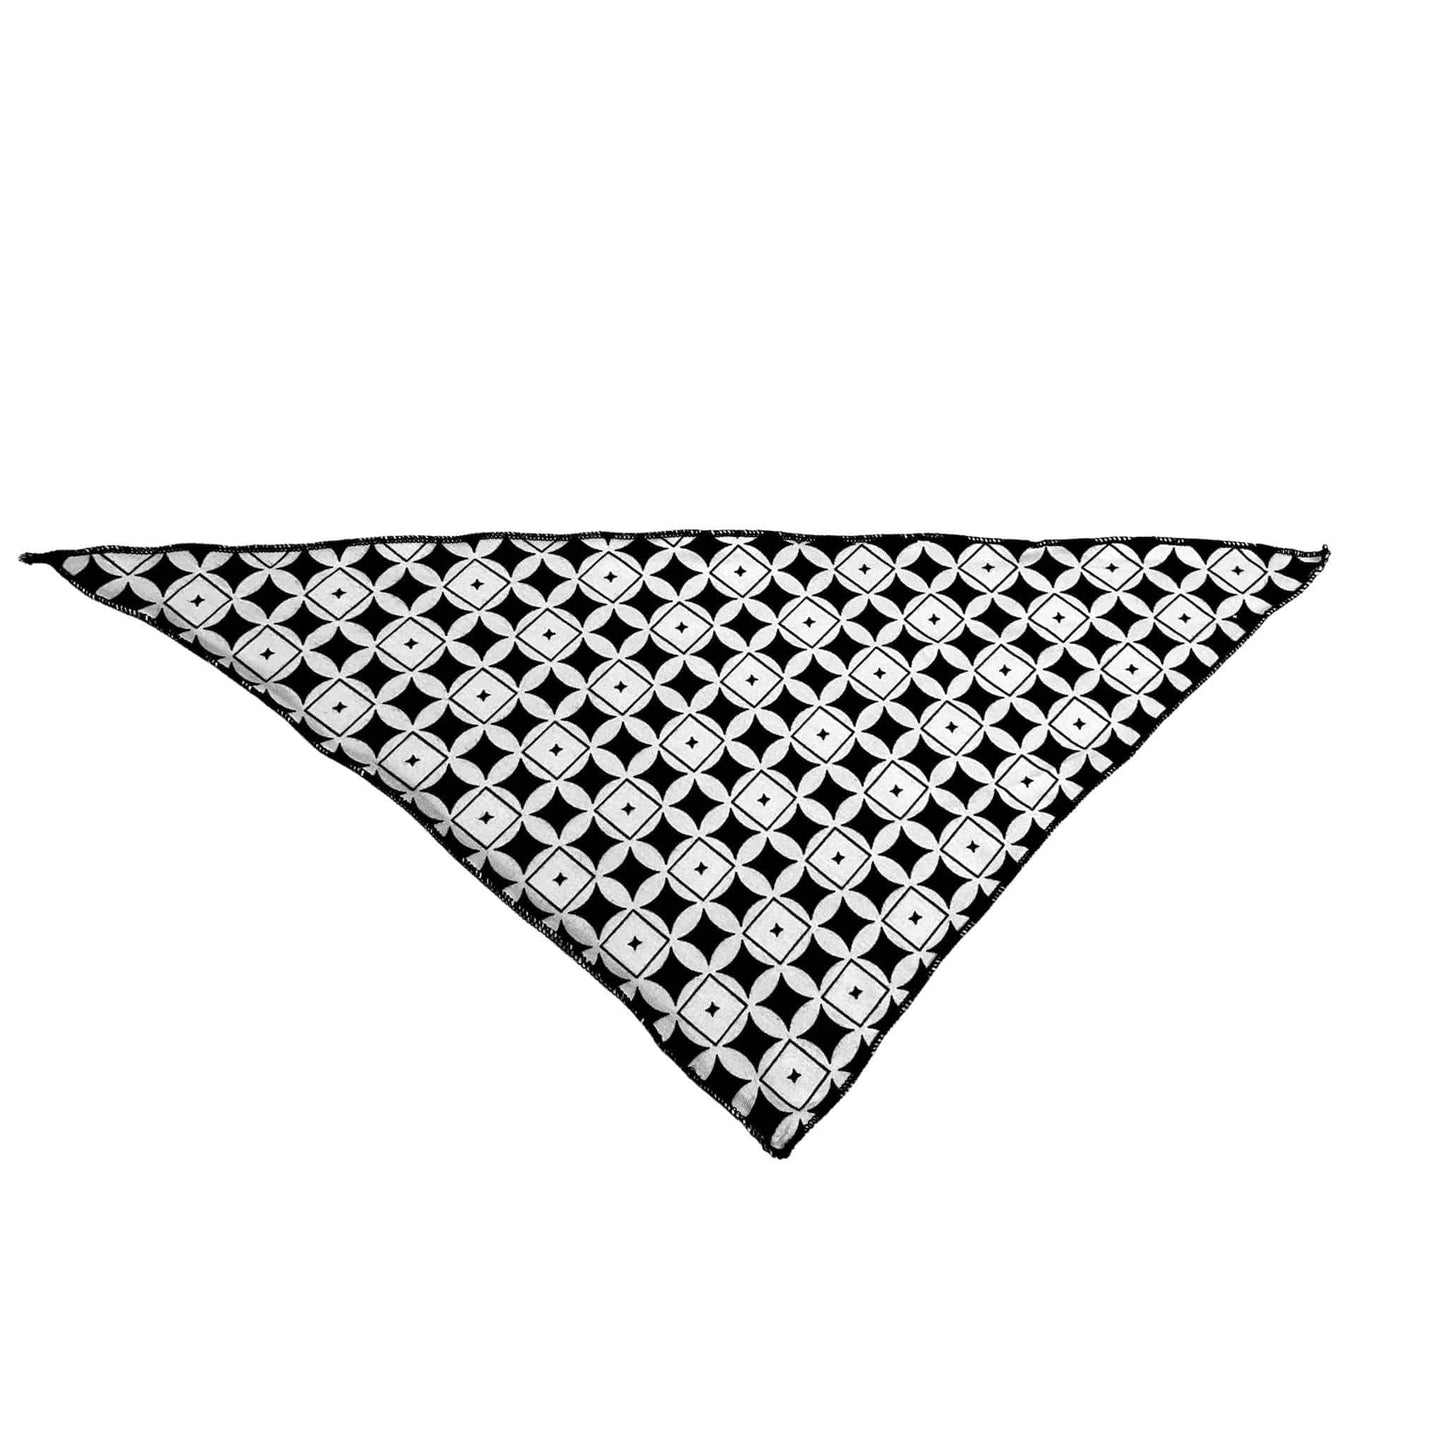 Triangular bandana printed with mod, black and white geometric pattern